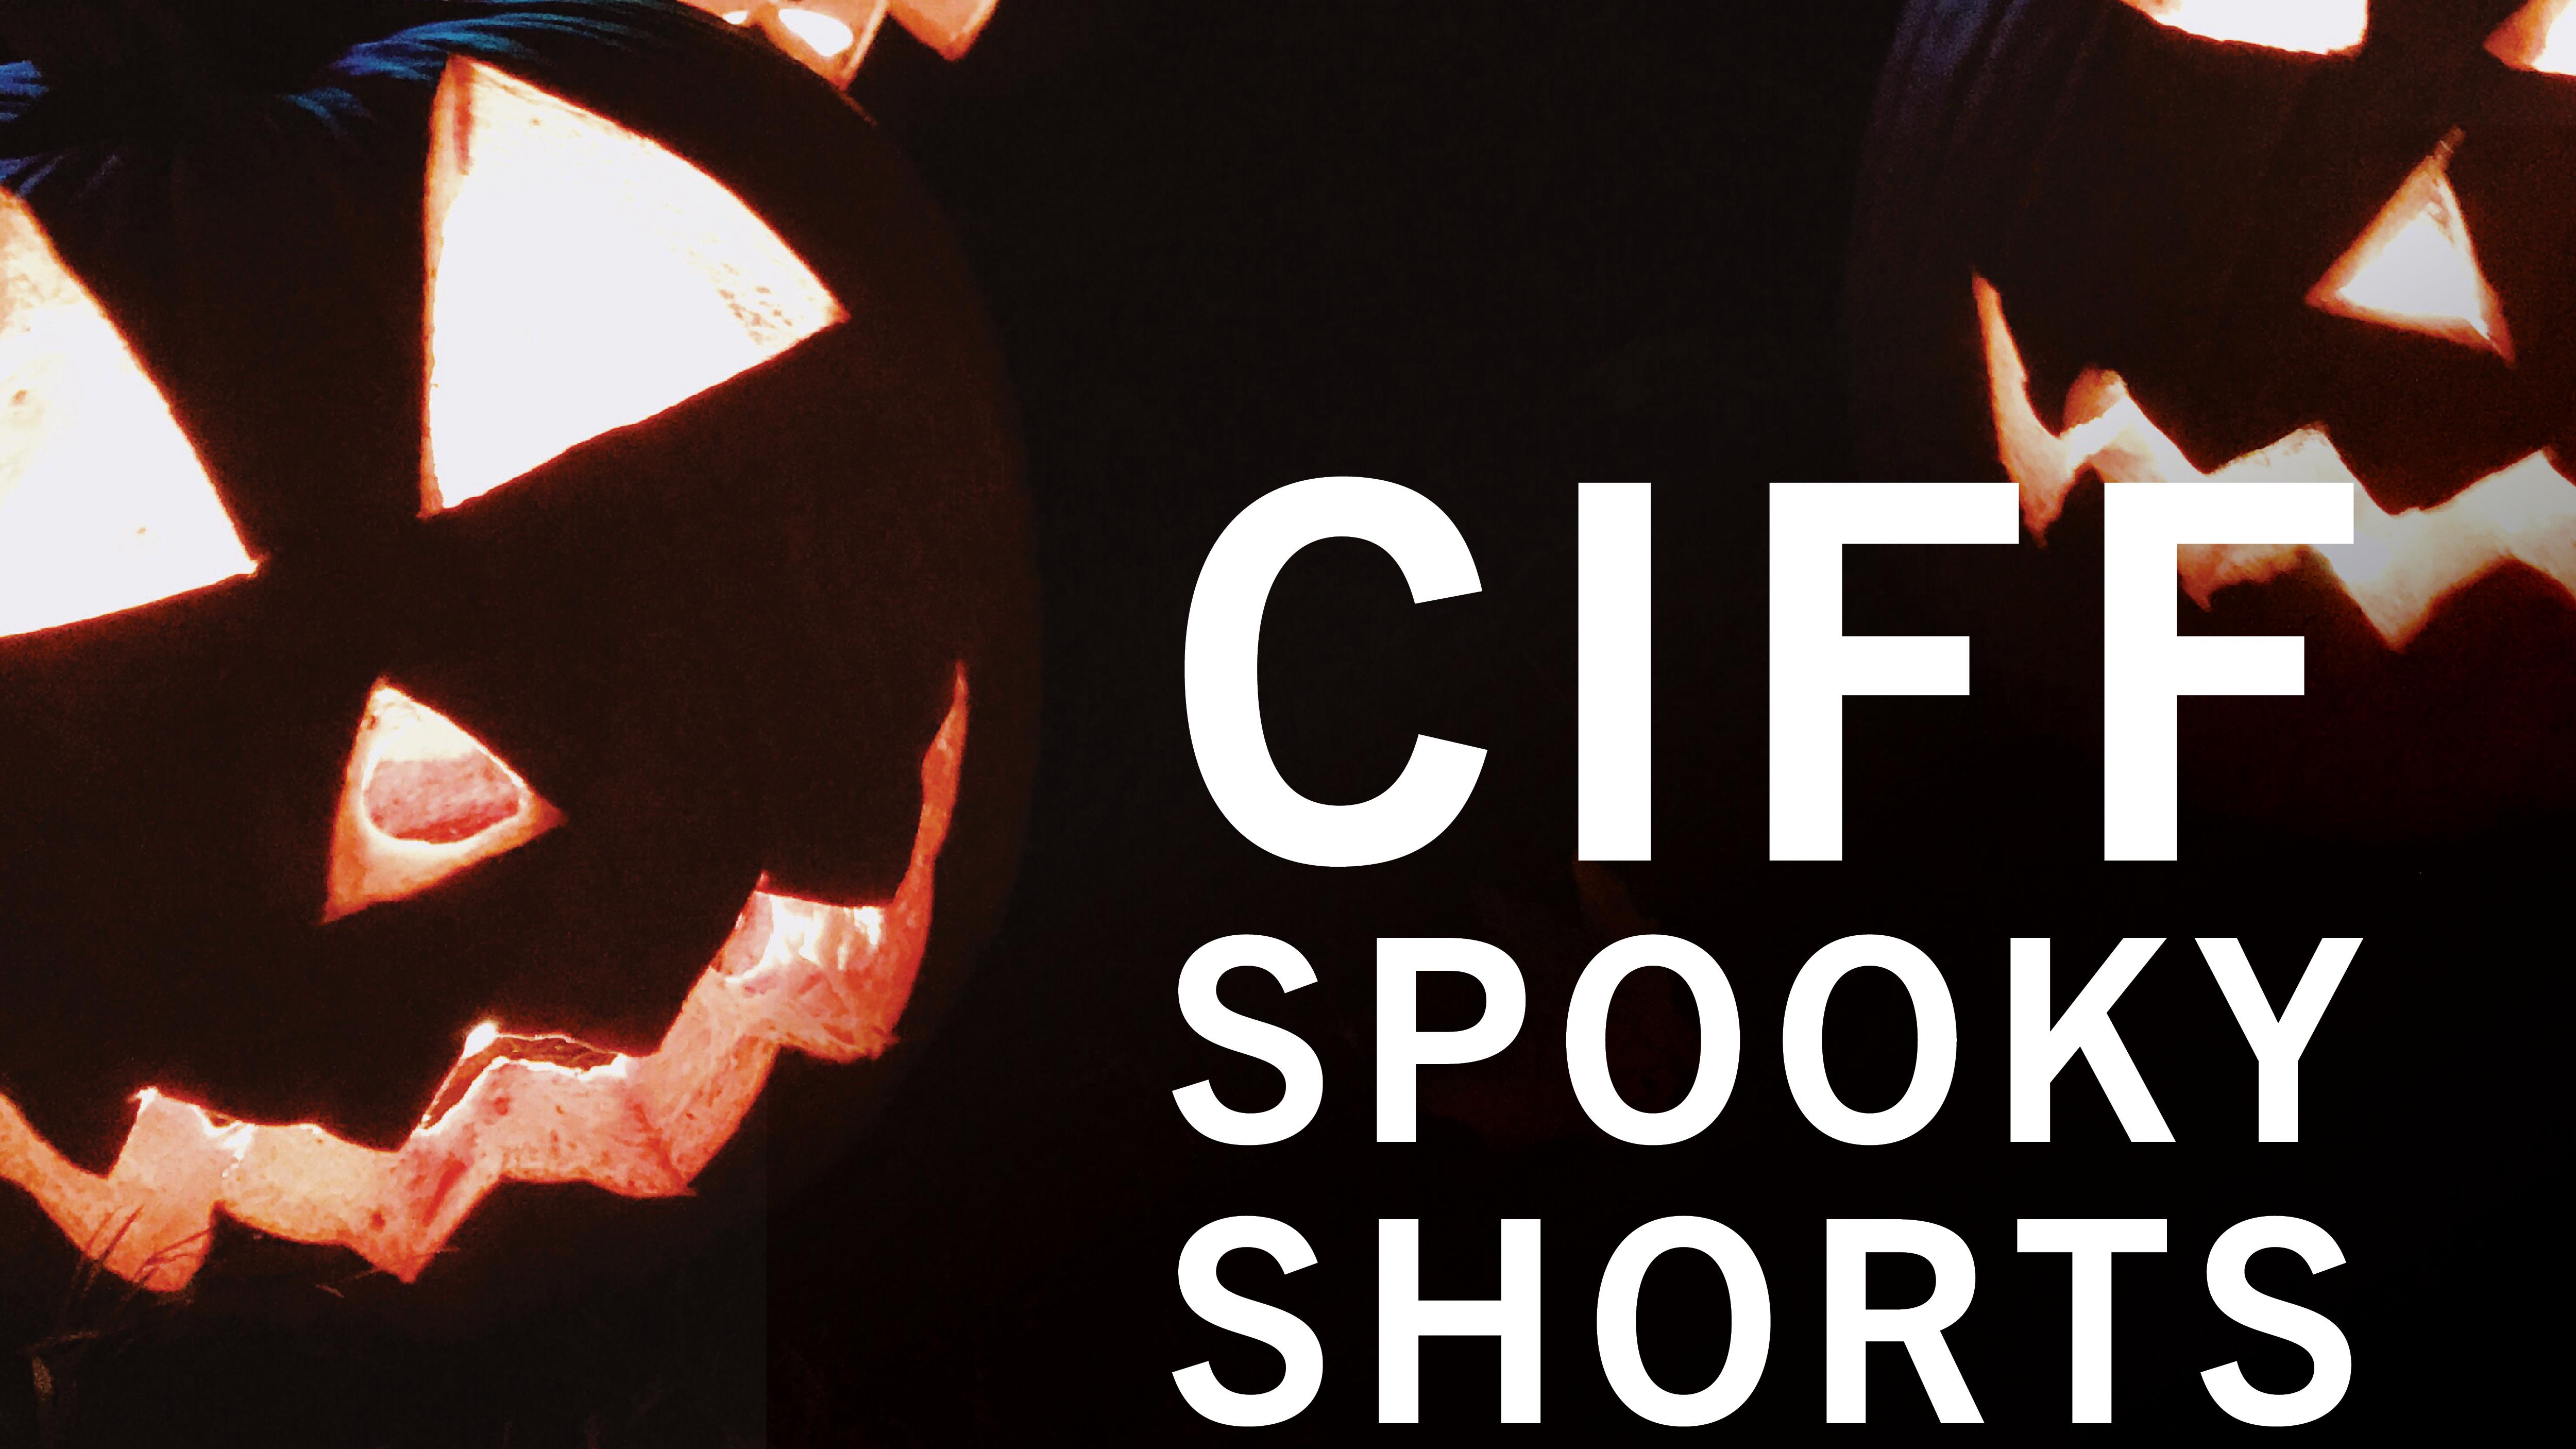 CIFF Spooky Shorts